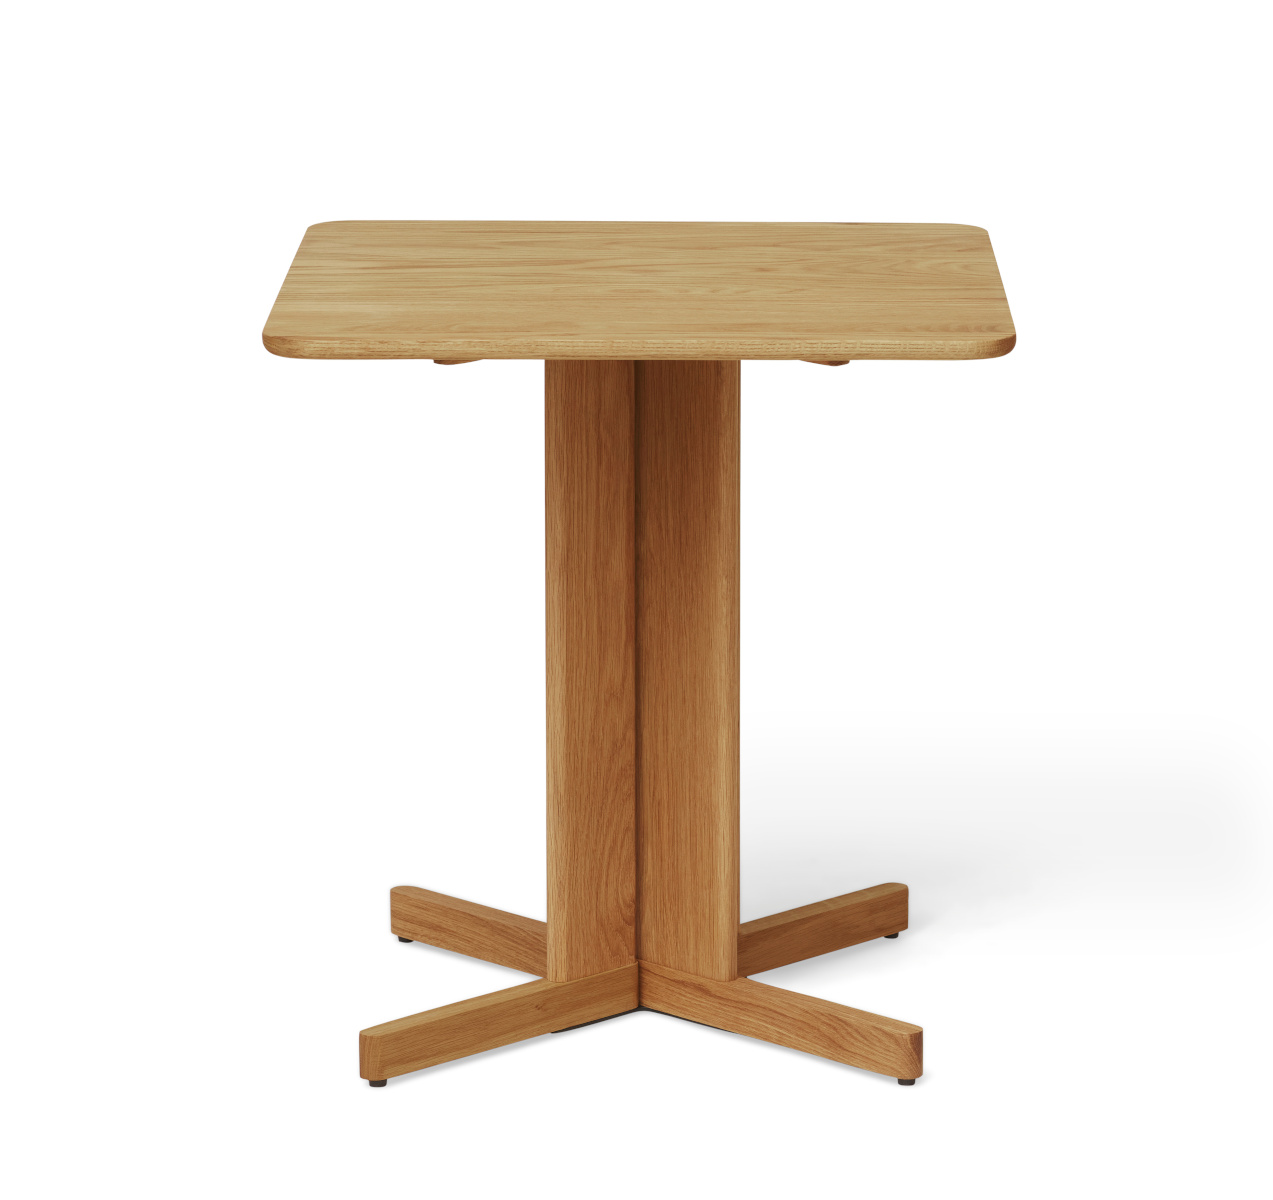 Quatrefoil Tisch, 68 x 68 cm, eiche geölt